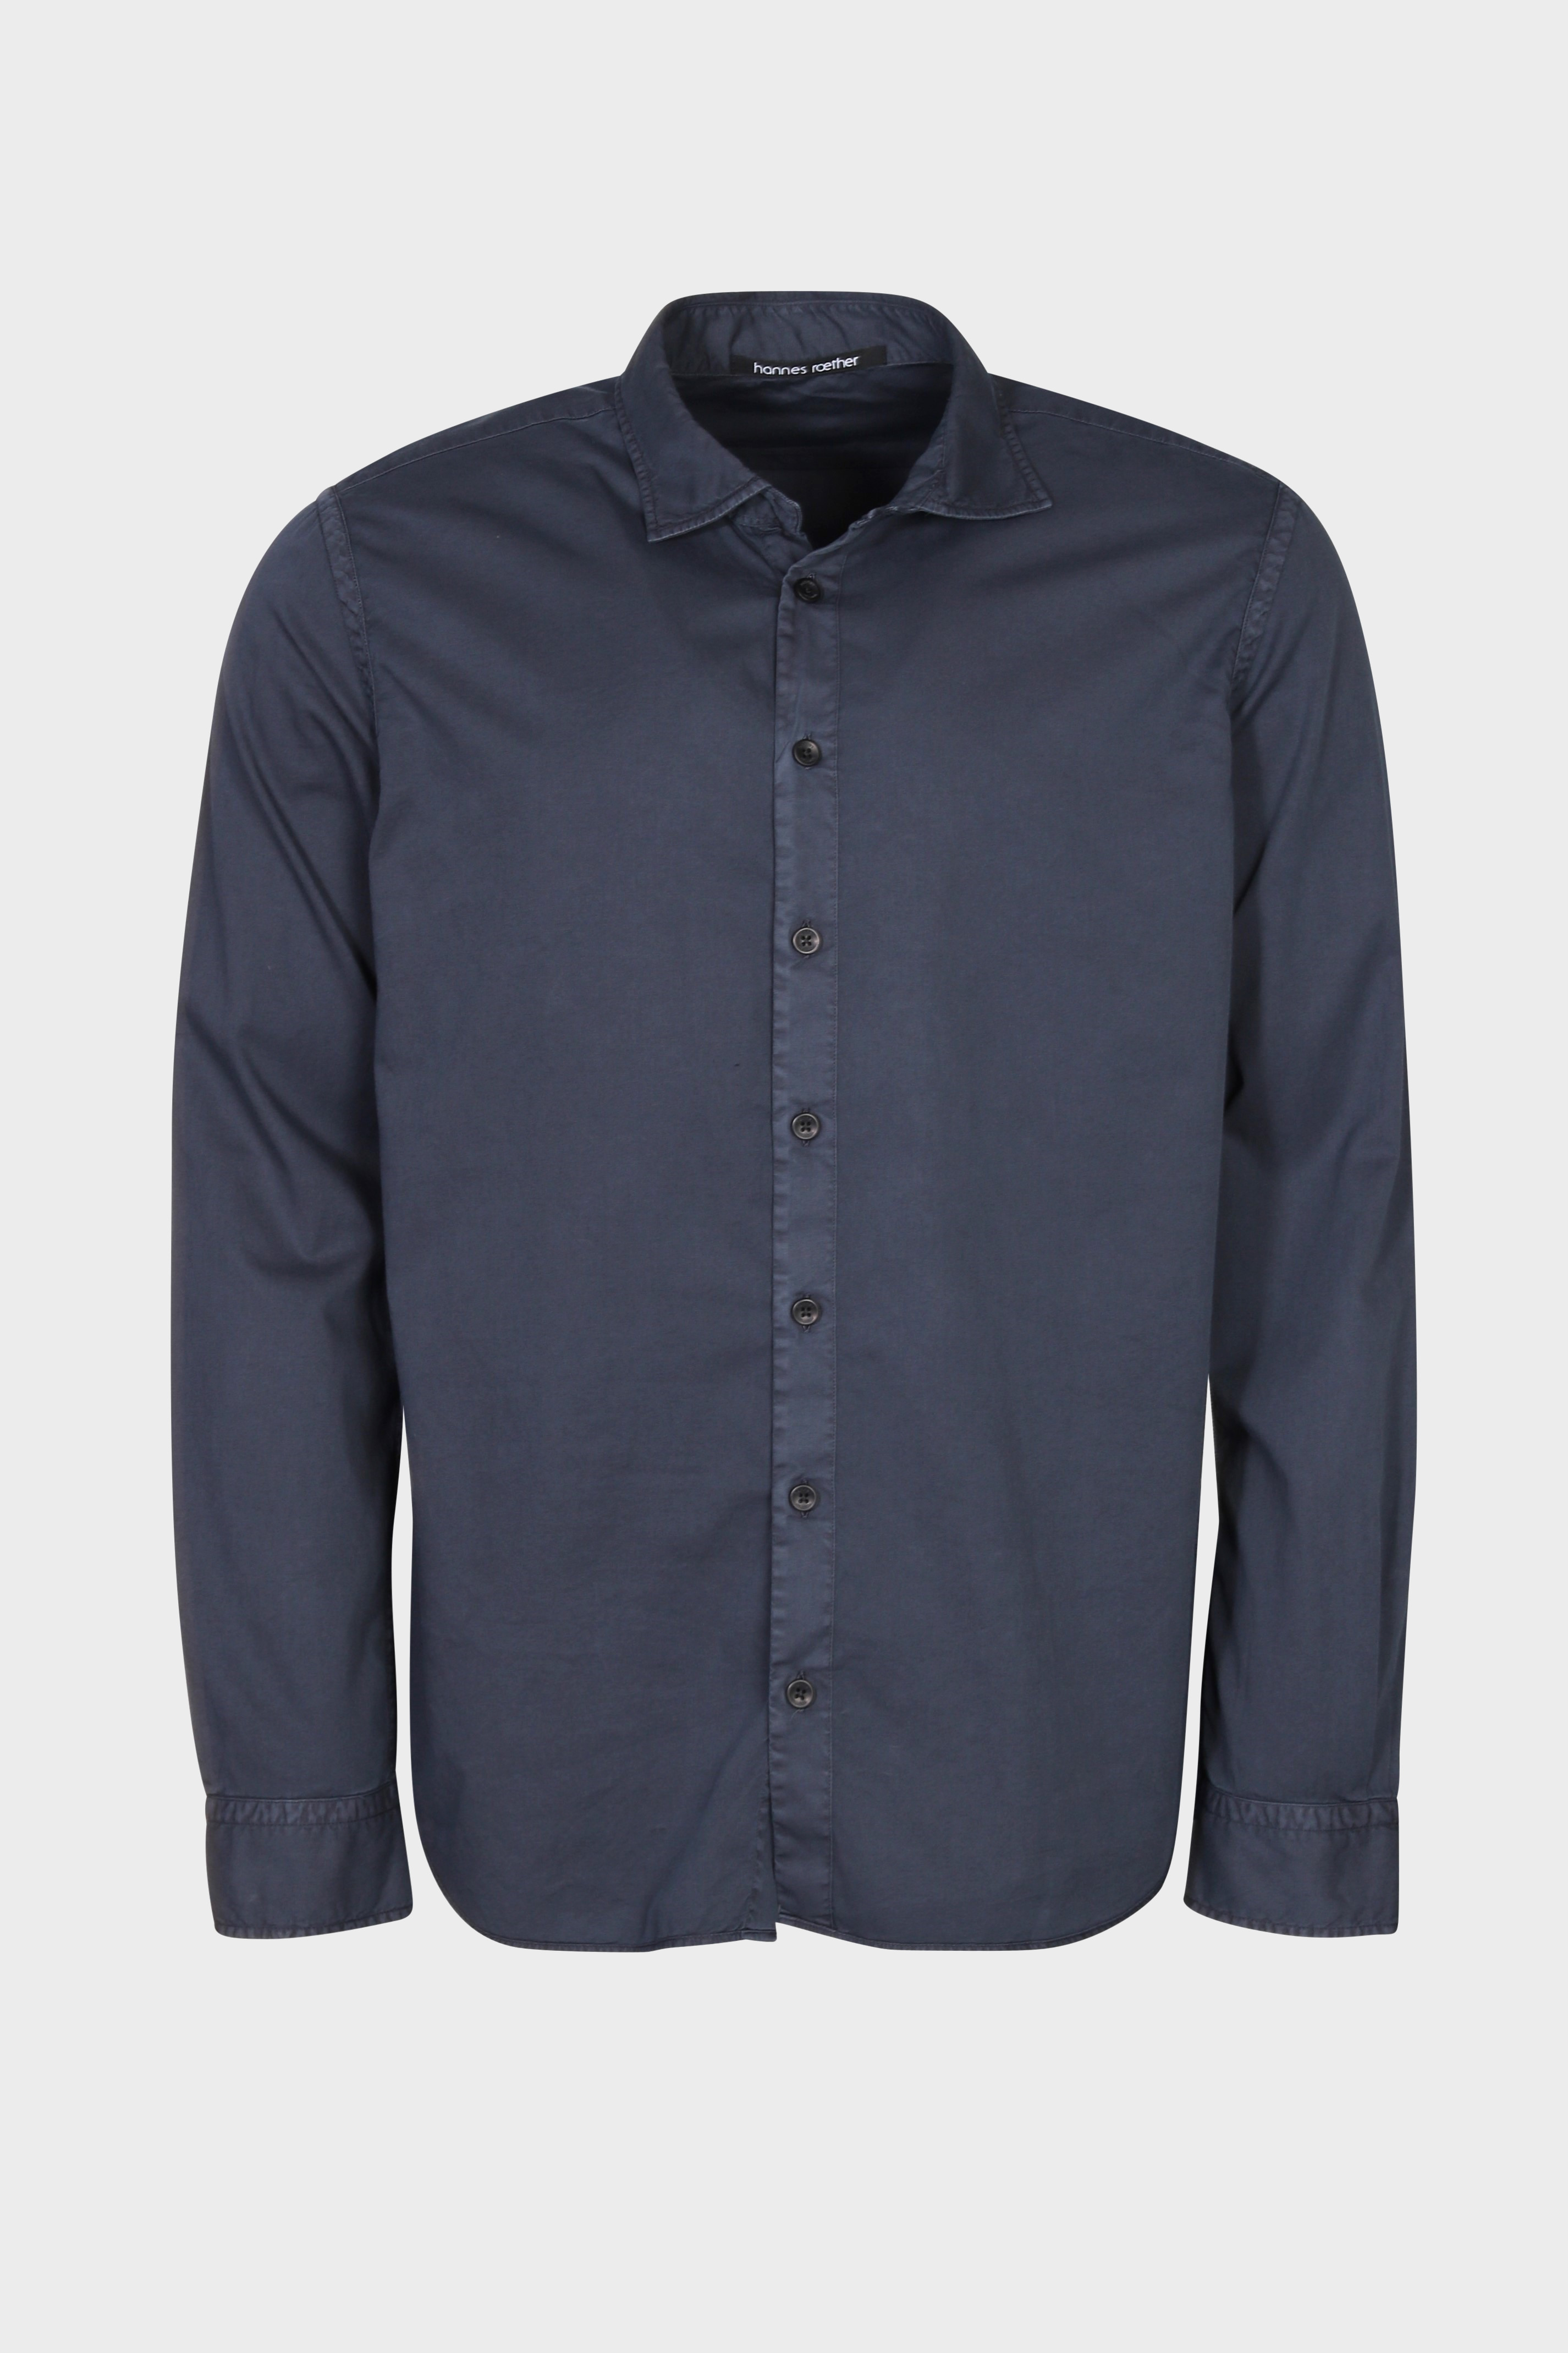 HANNES ROETHER Cotton Shirt in Dark Blue L